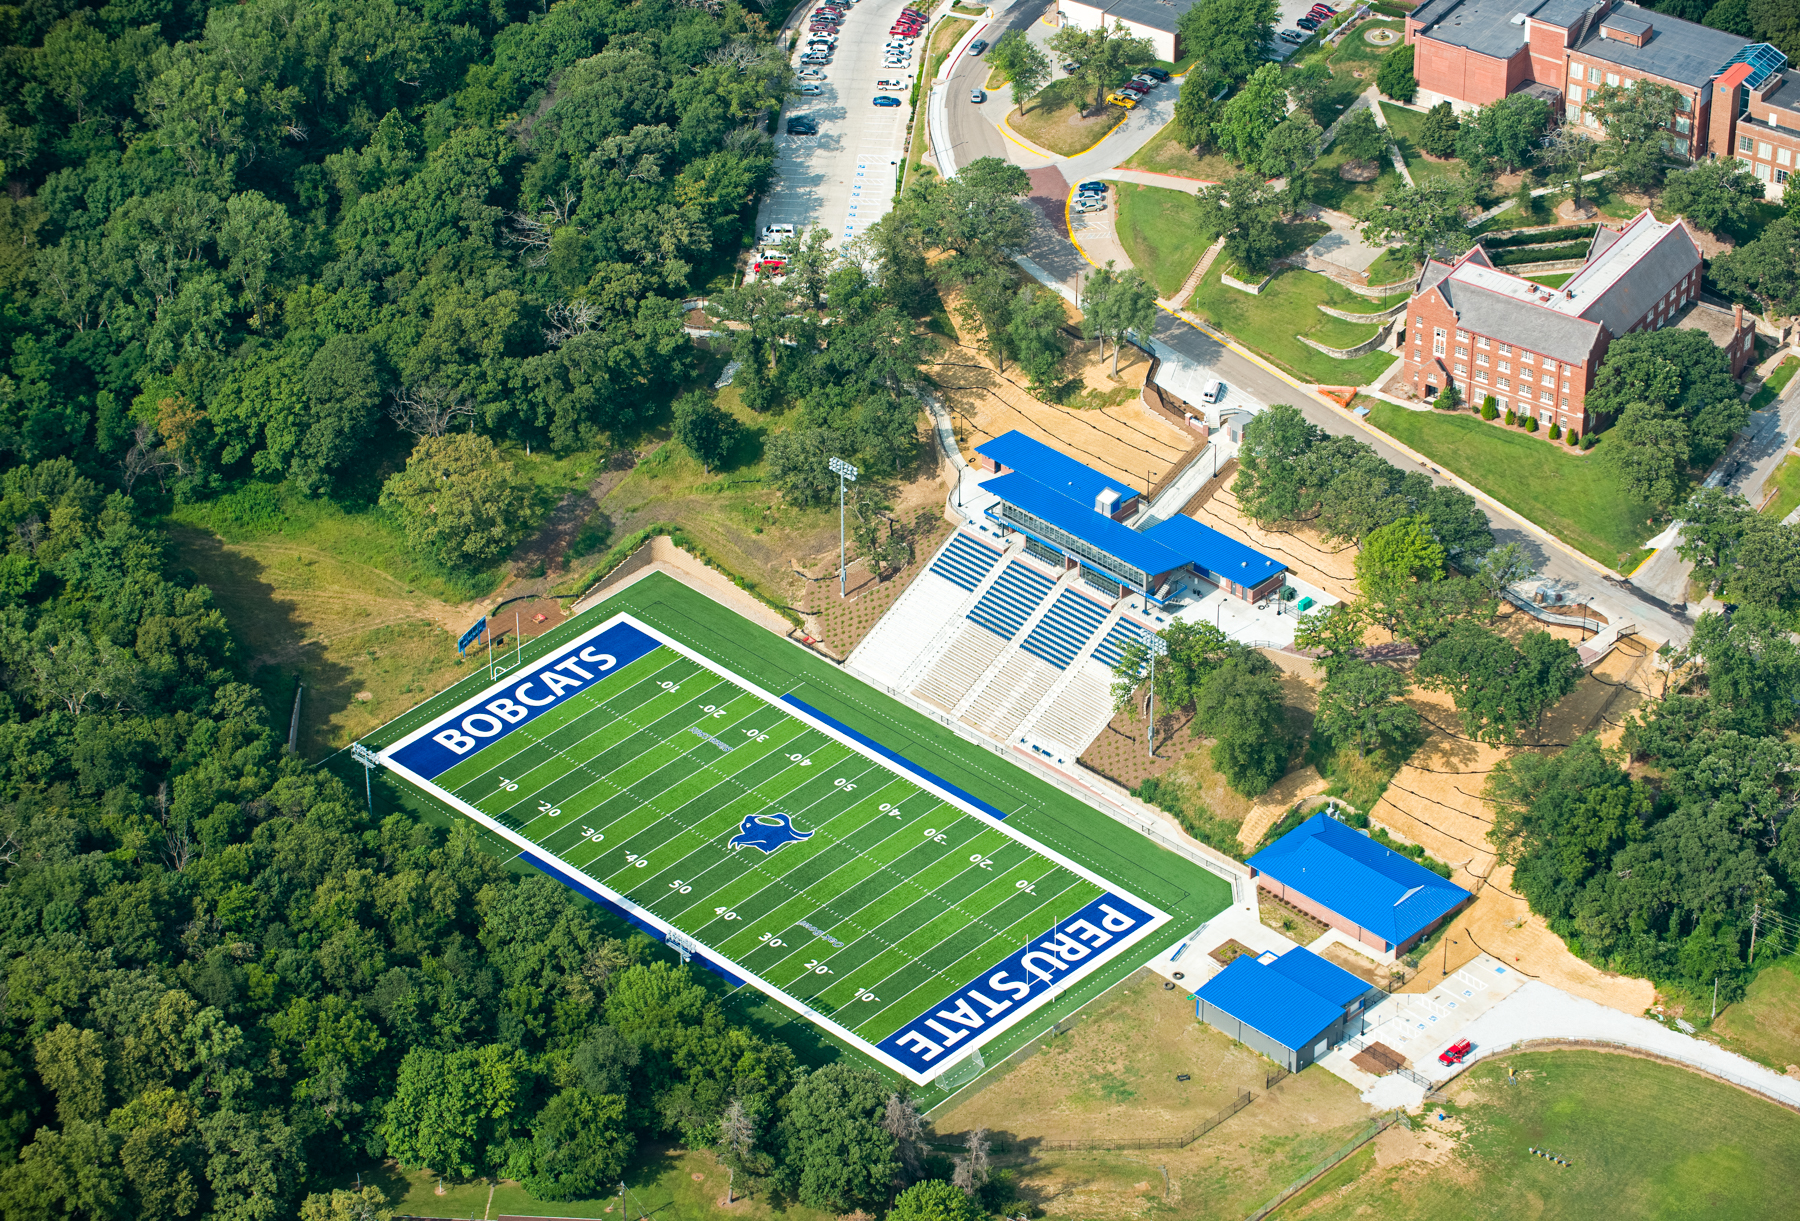 An aerial view of the Oak Bowl football stadium.